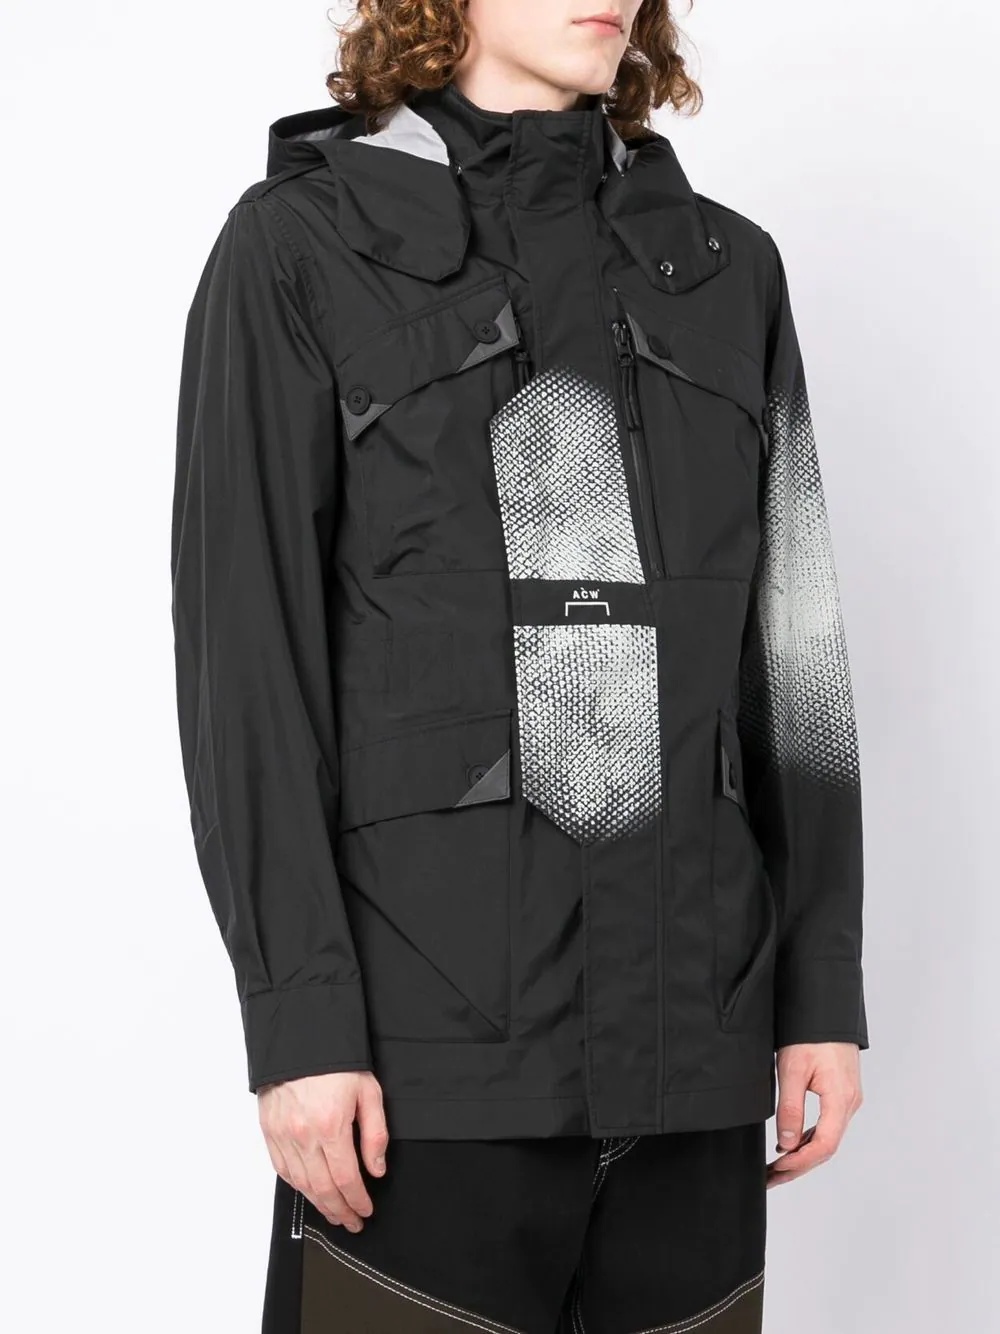 printed-panel jacket - 4